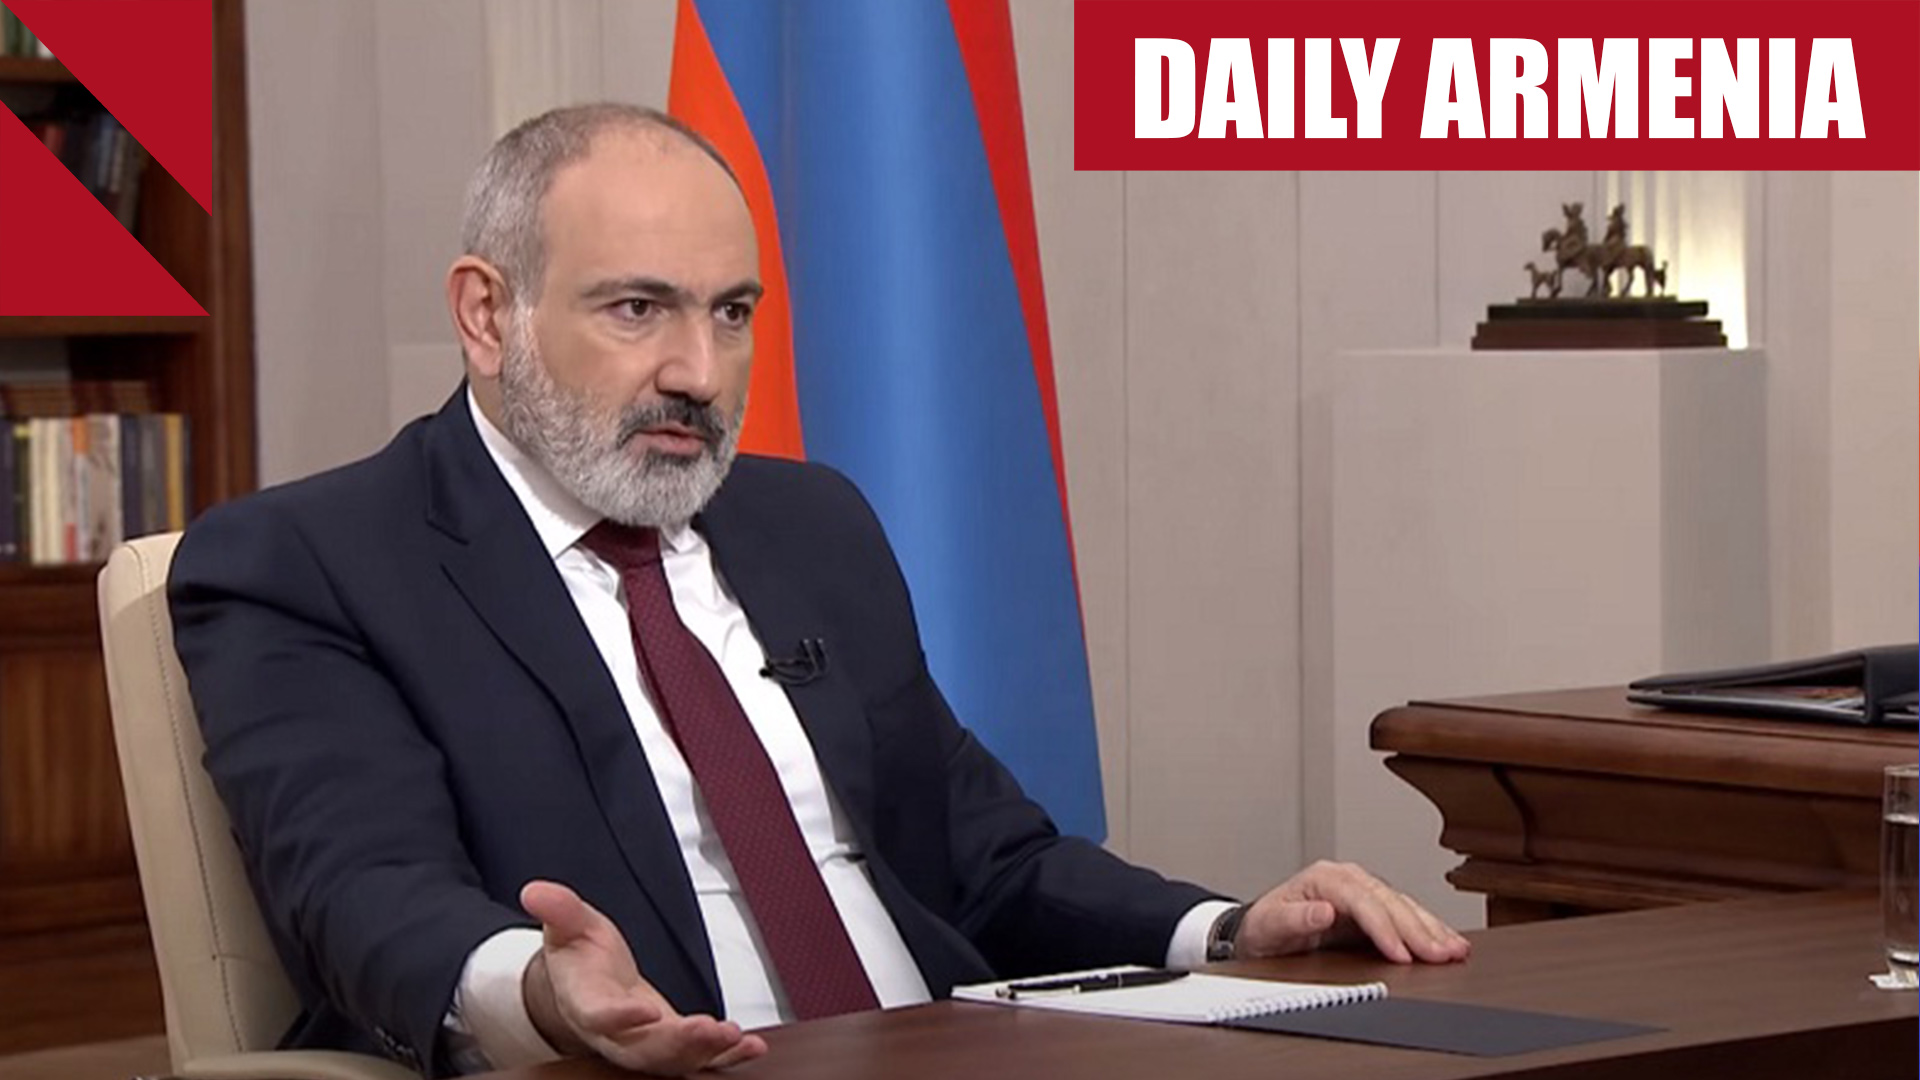 Pashinyan rebukes Putin and calls November 9 agreement “watered down”